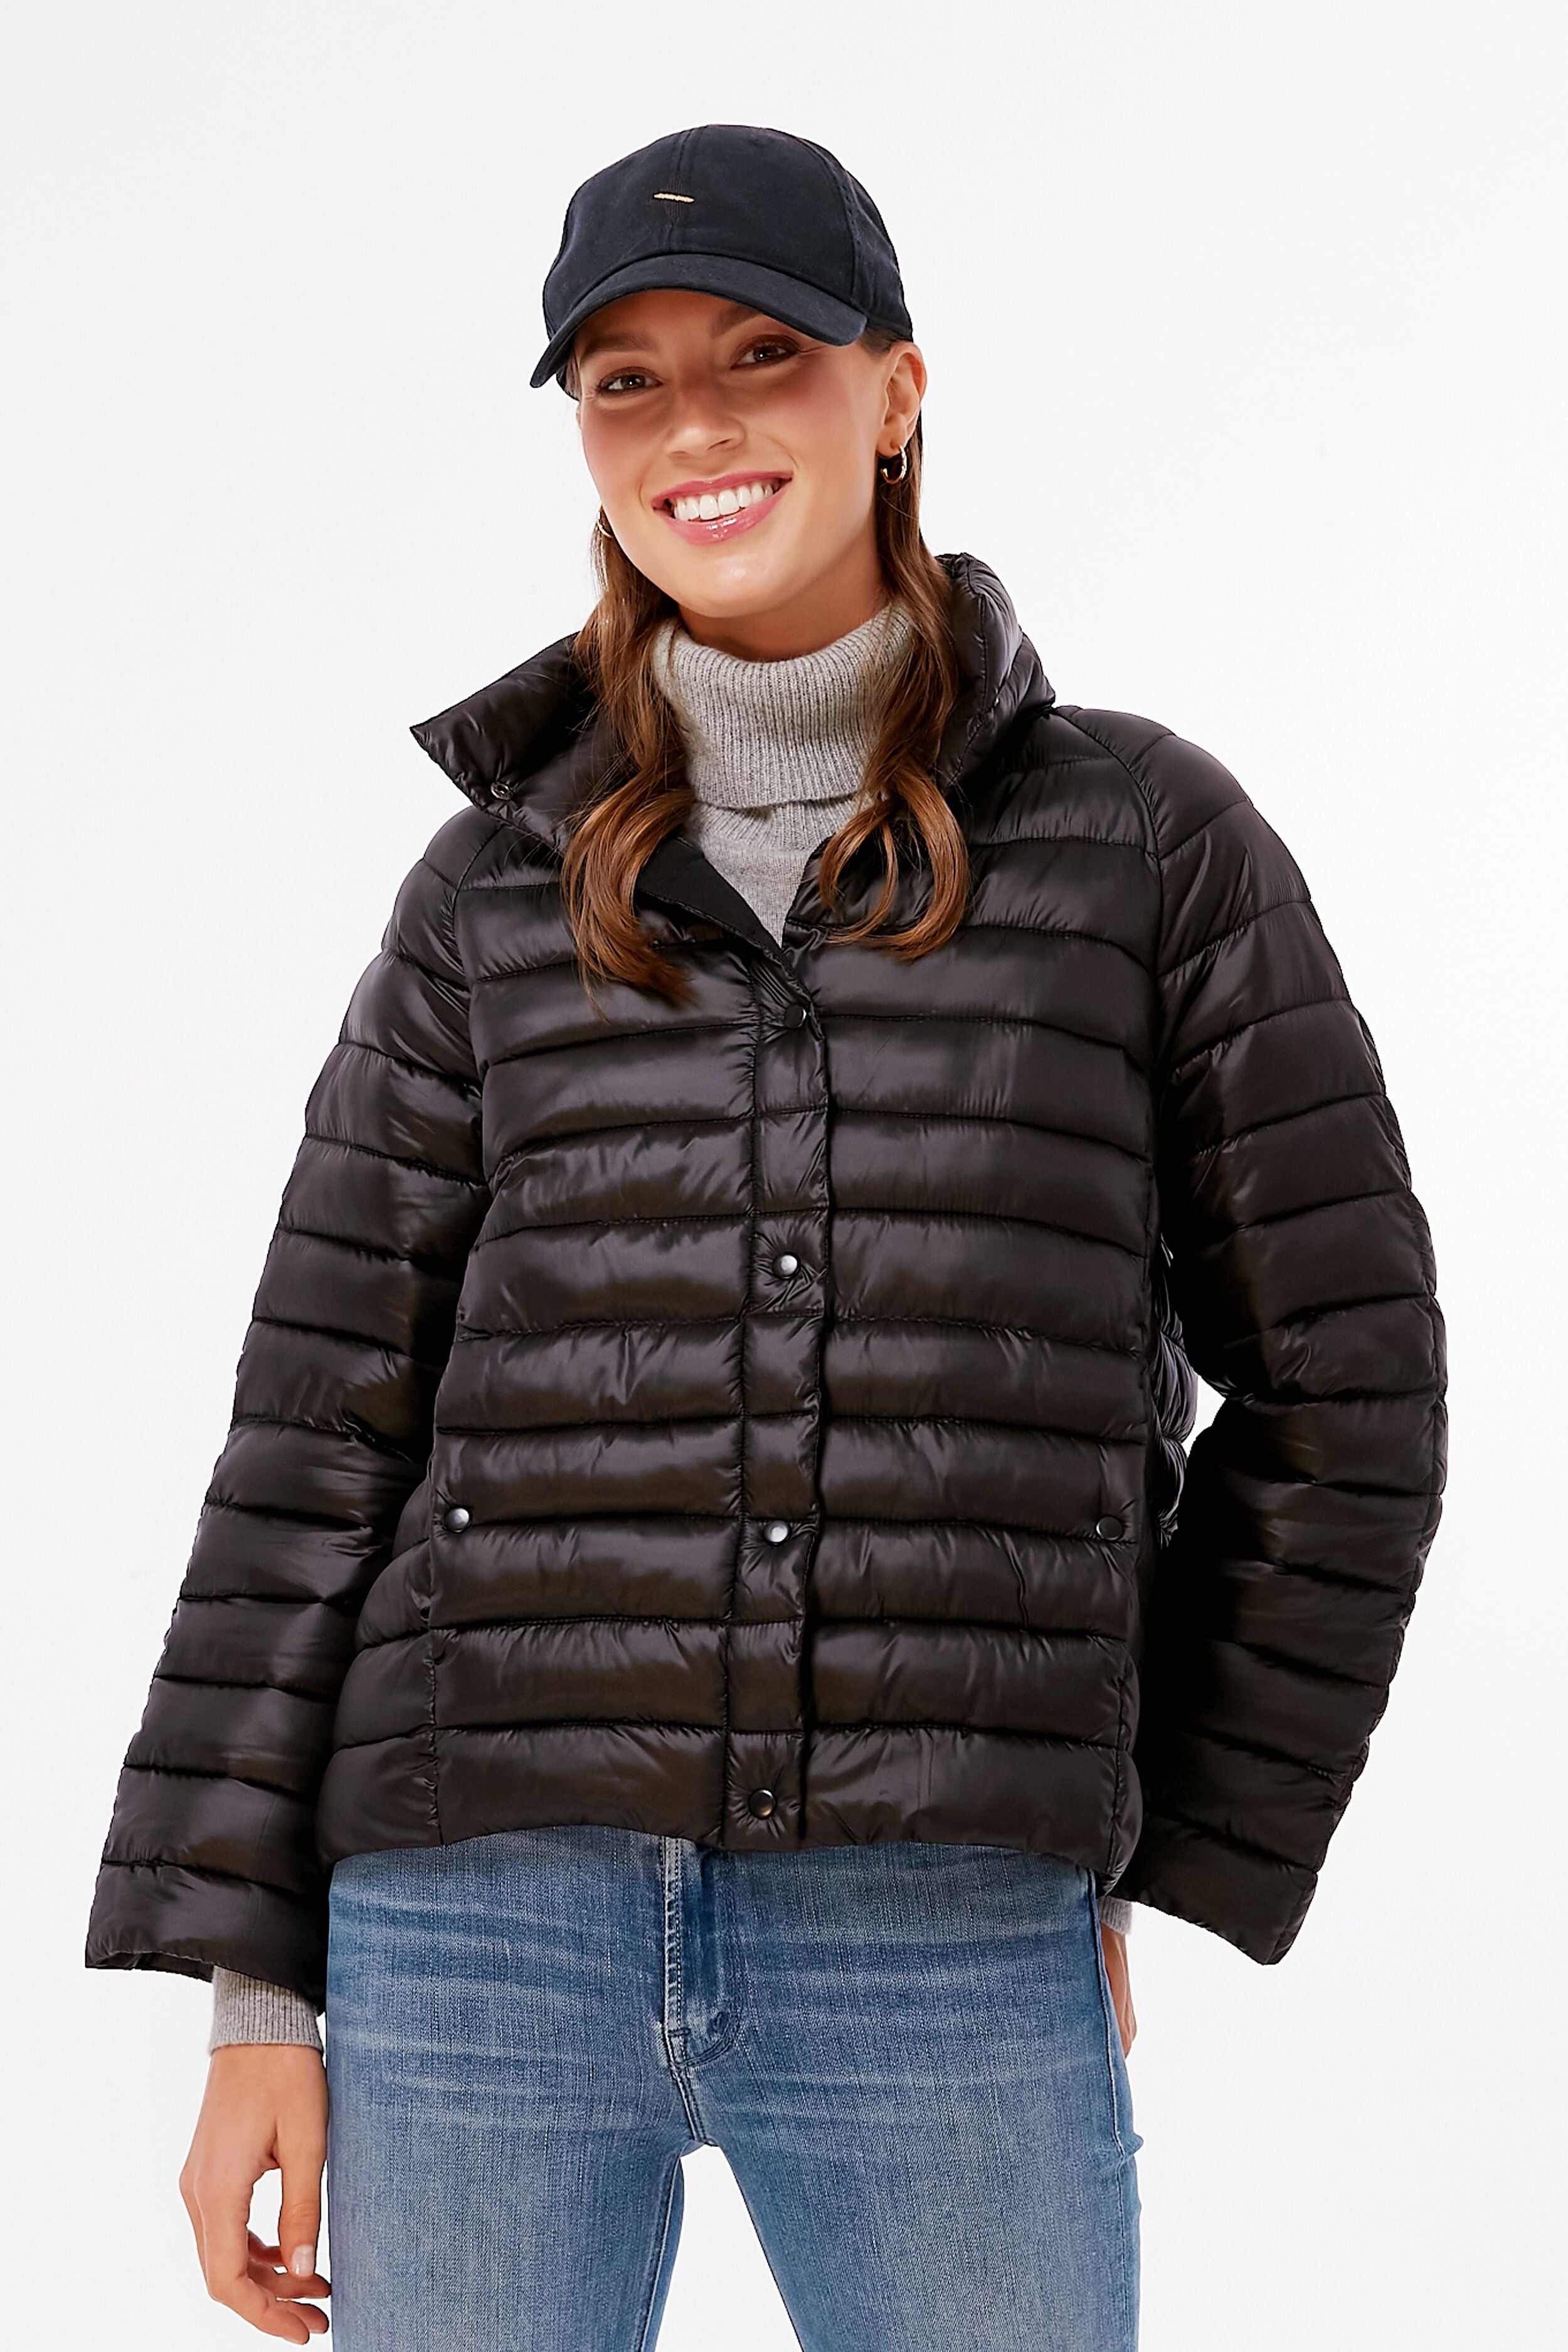 Buy STOP Black Textured Polyester Women's Winter Wear Jacket